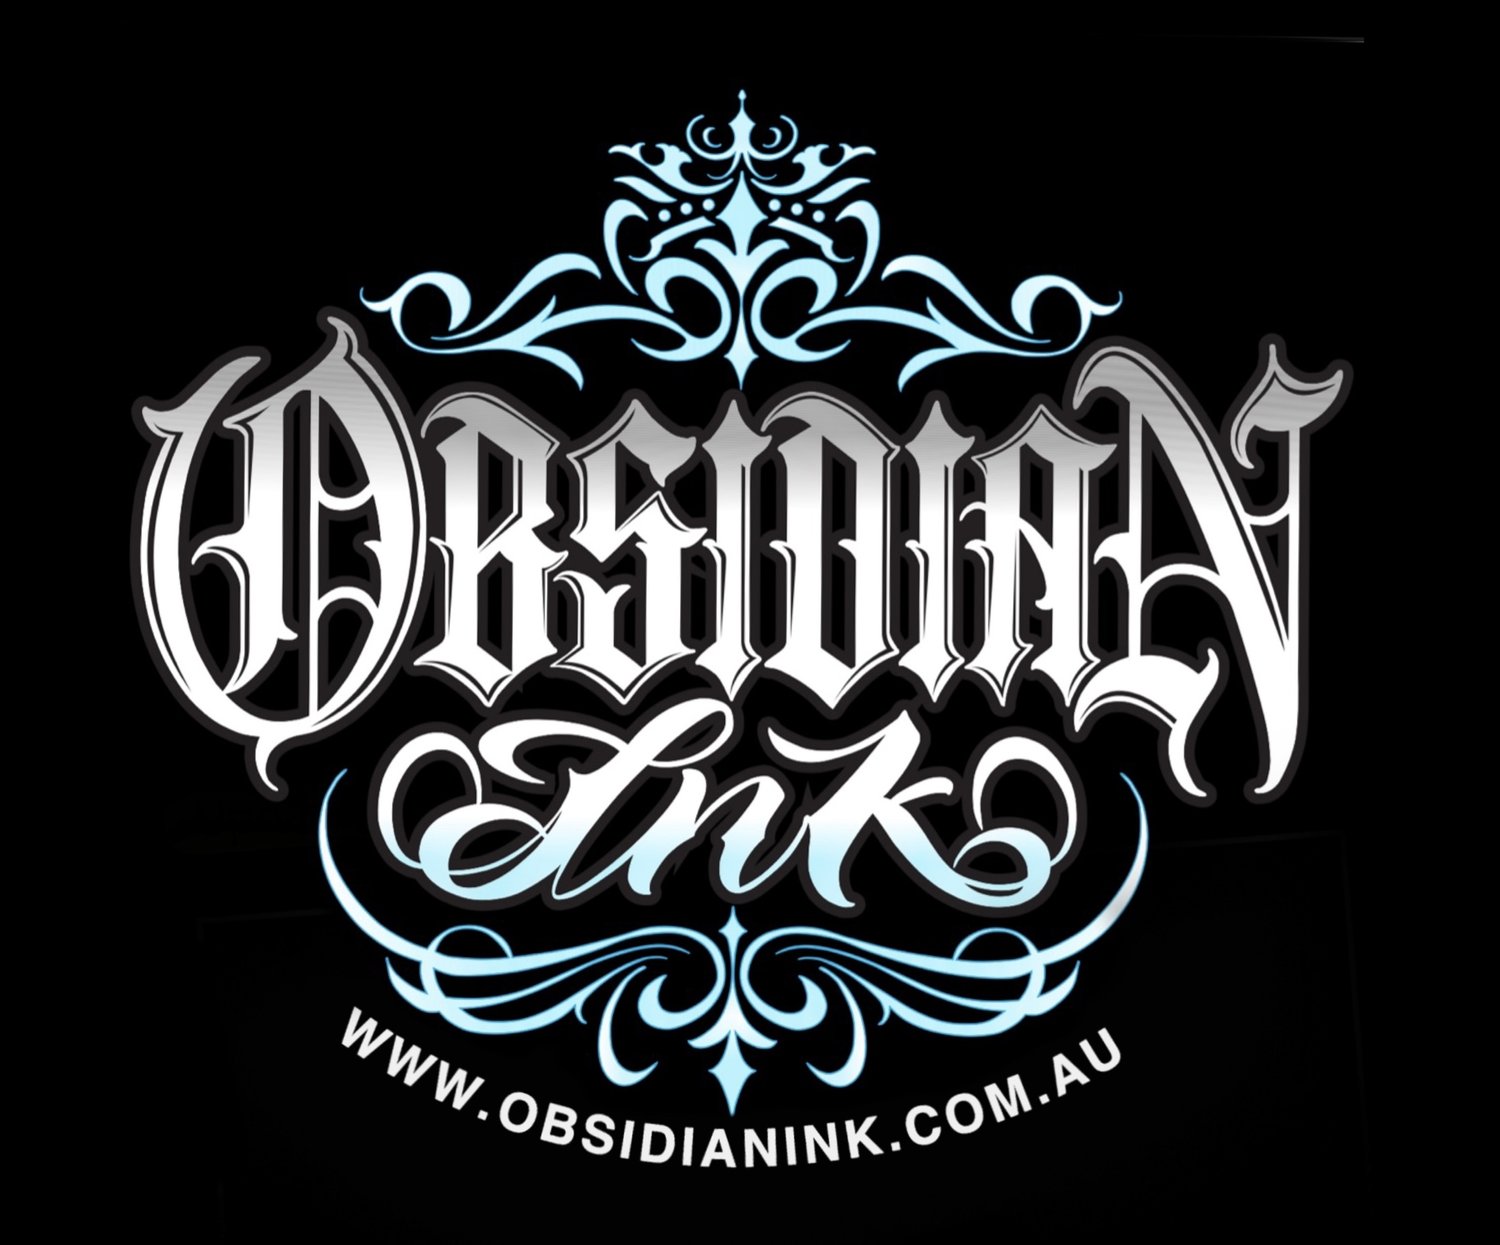 Obsidian Ink Official